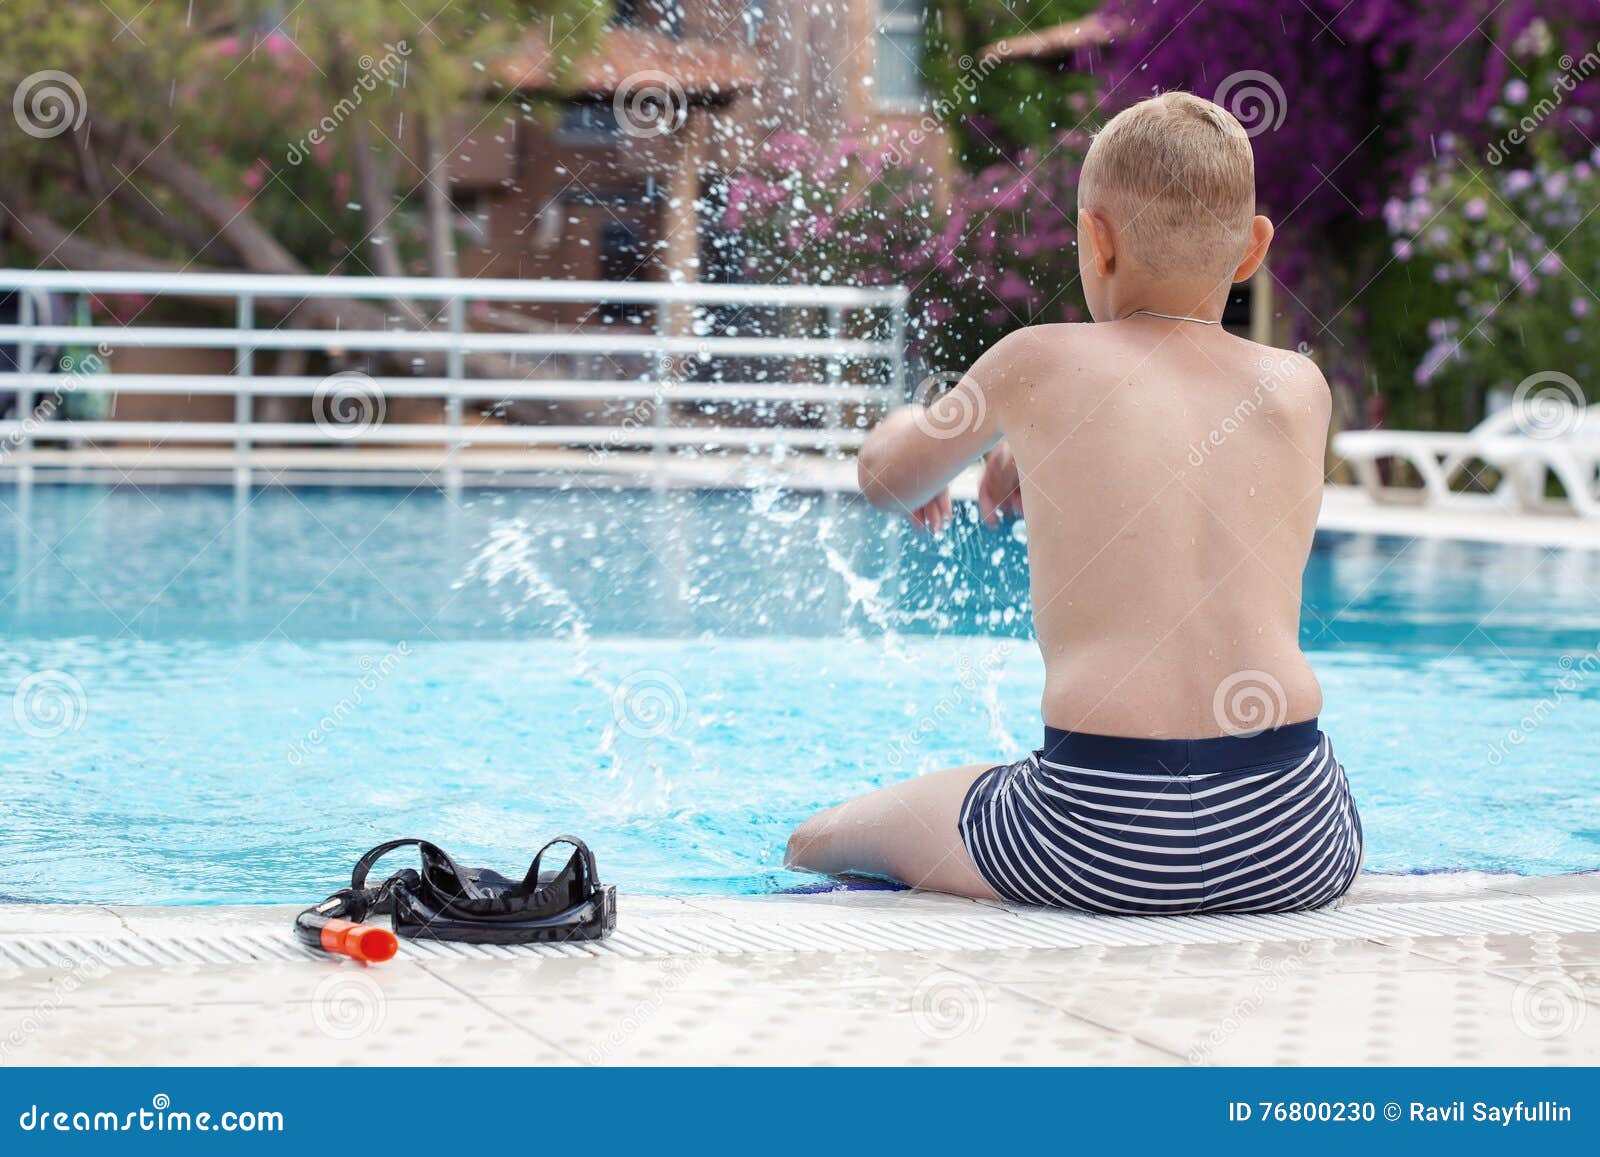 Мальчик трусы бассейн. Мальчики в бассейне. Мальчишки в бассейне. Мальчик возле бассейна. Мальчики переодеваются для бассейна.